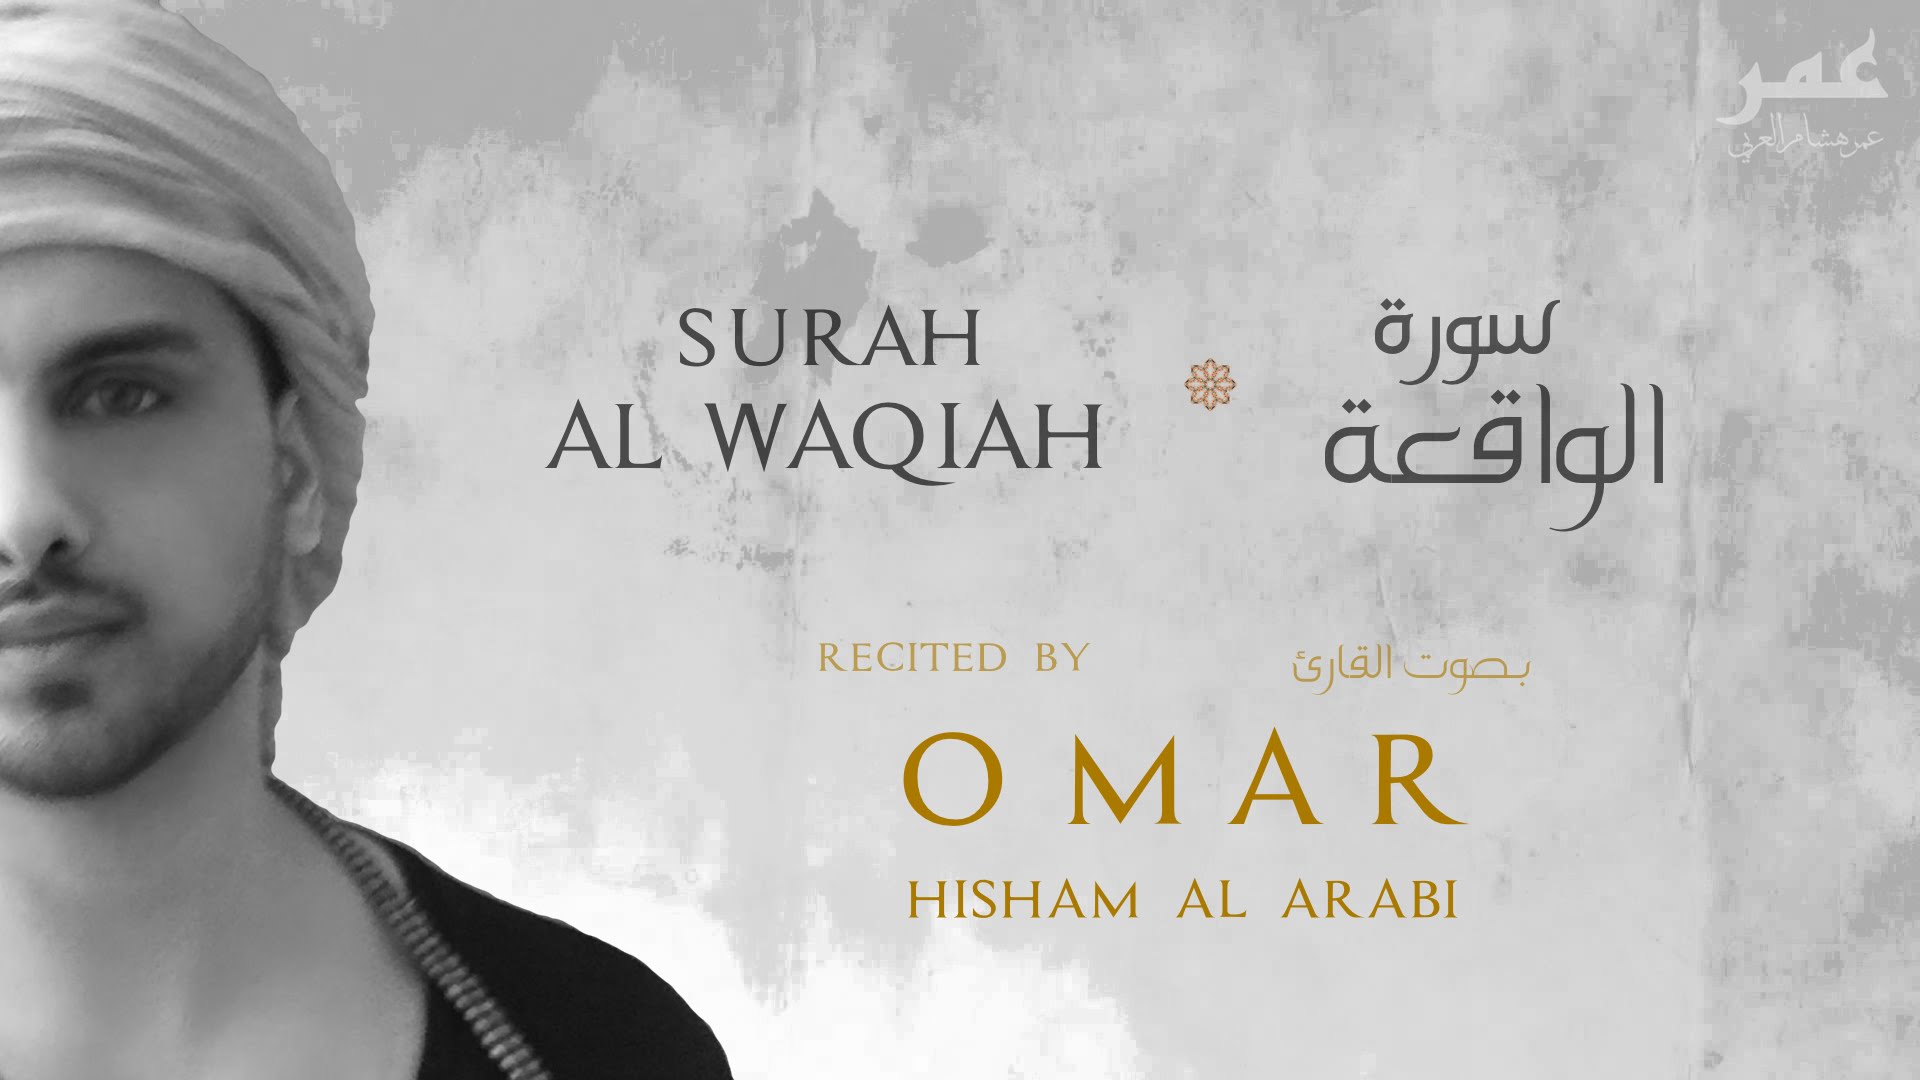 Biography omar hisham al arabi